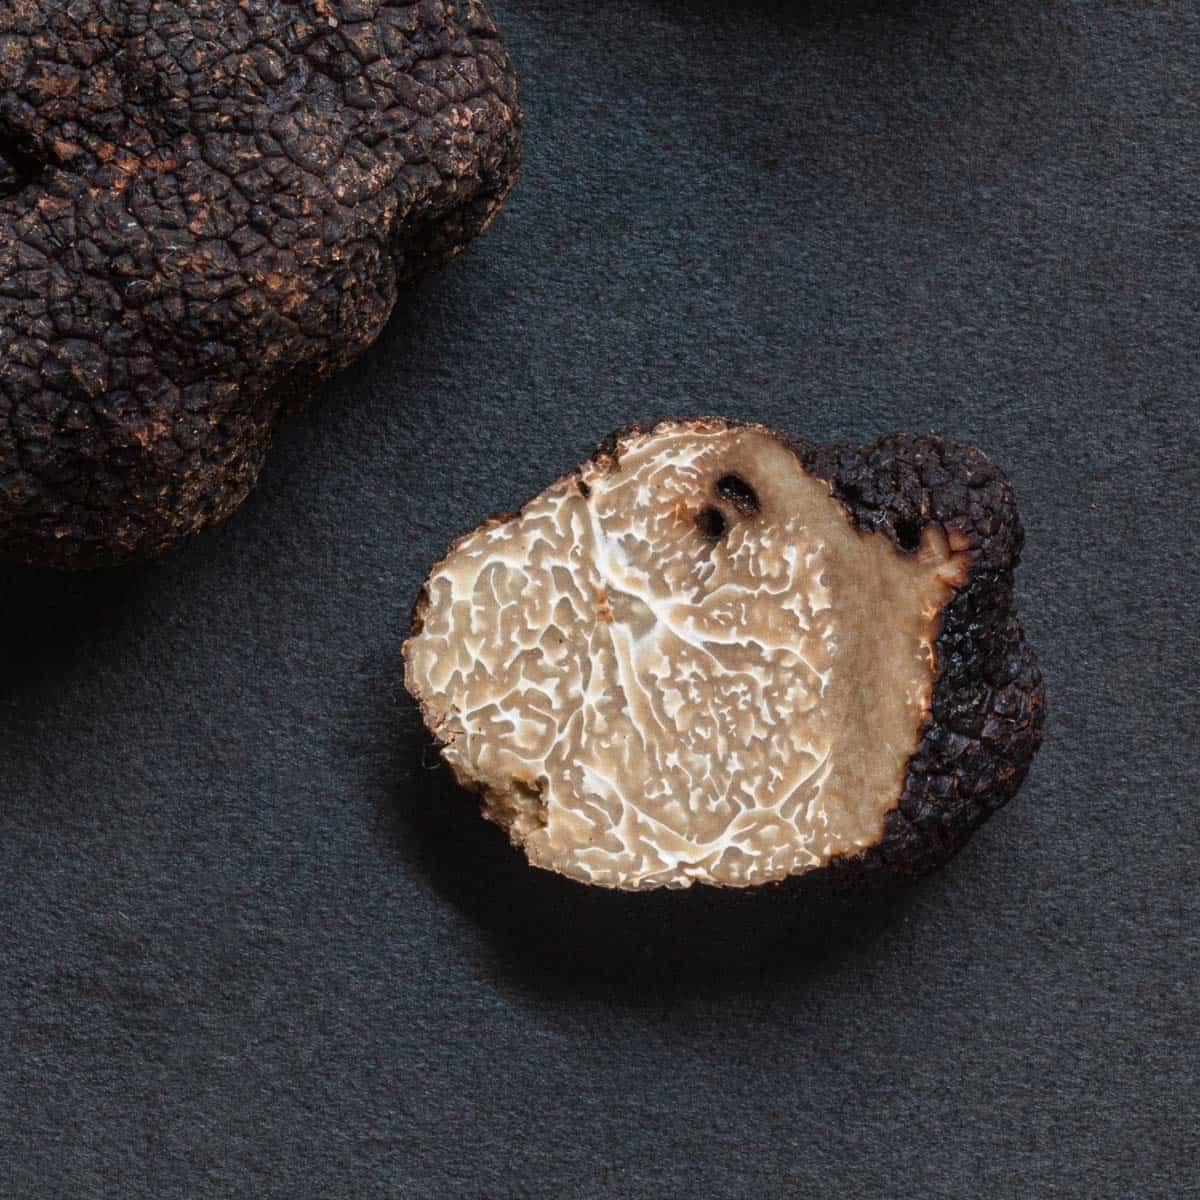 black summer truffles cut in half on a black background